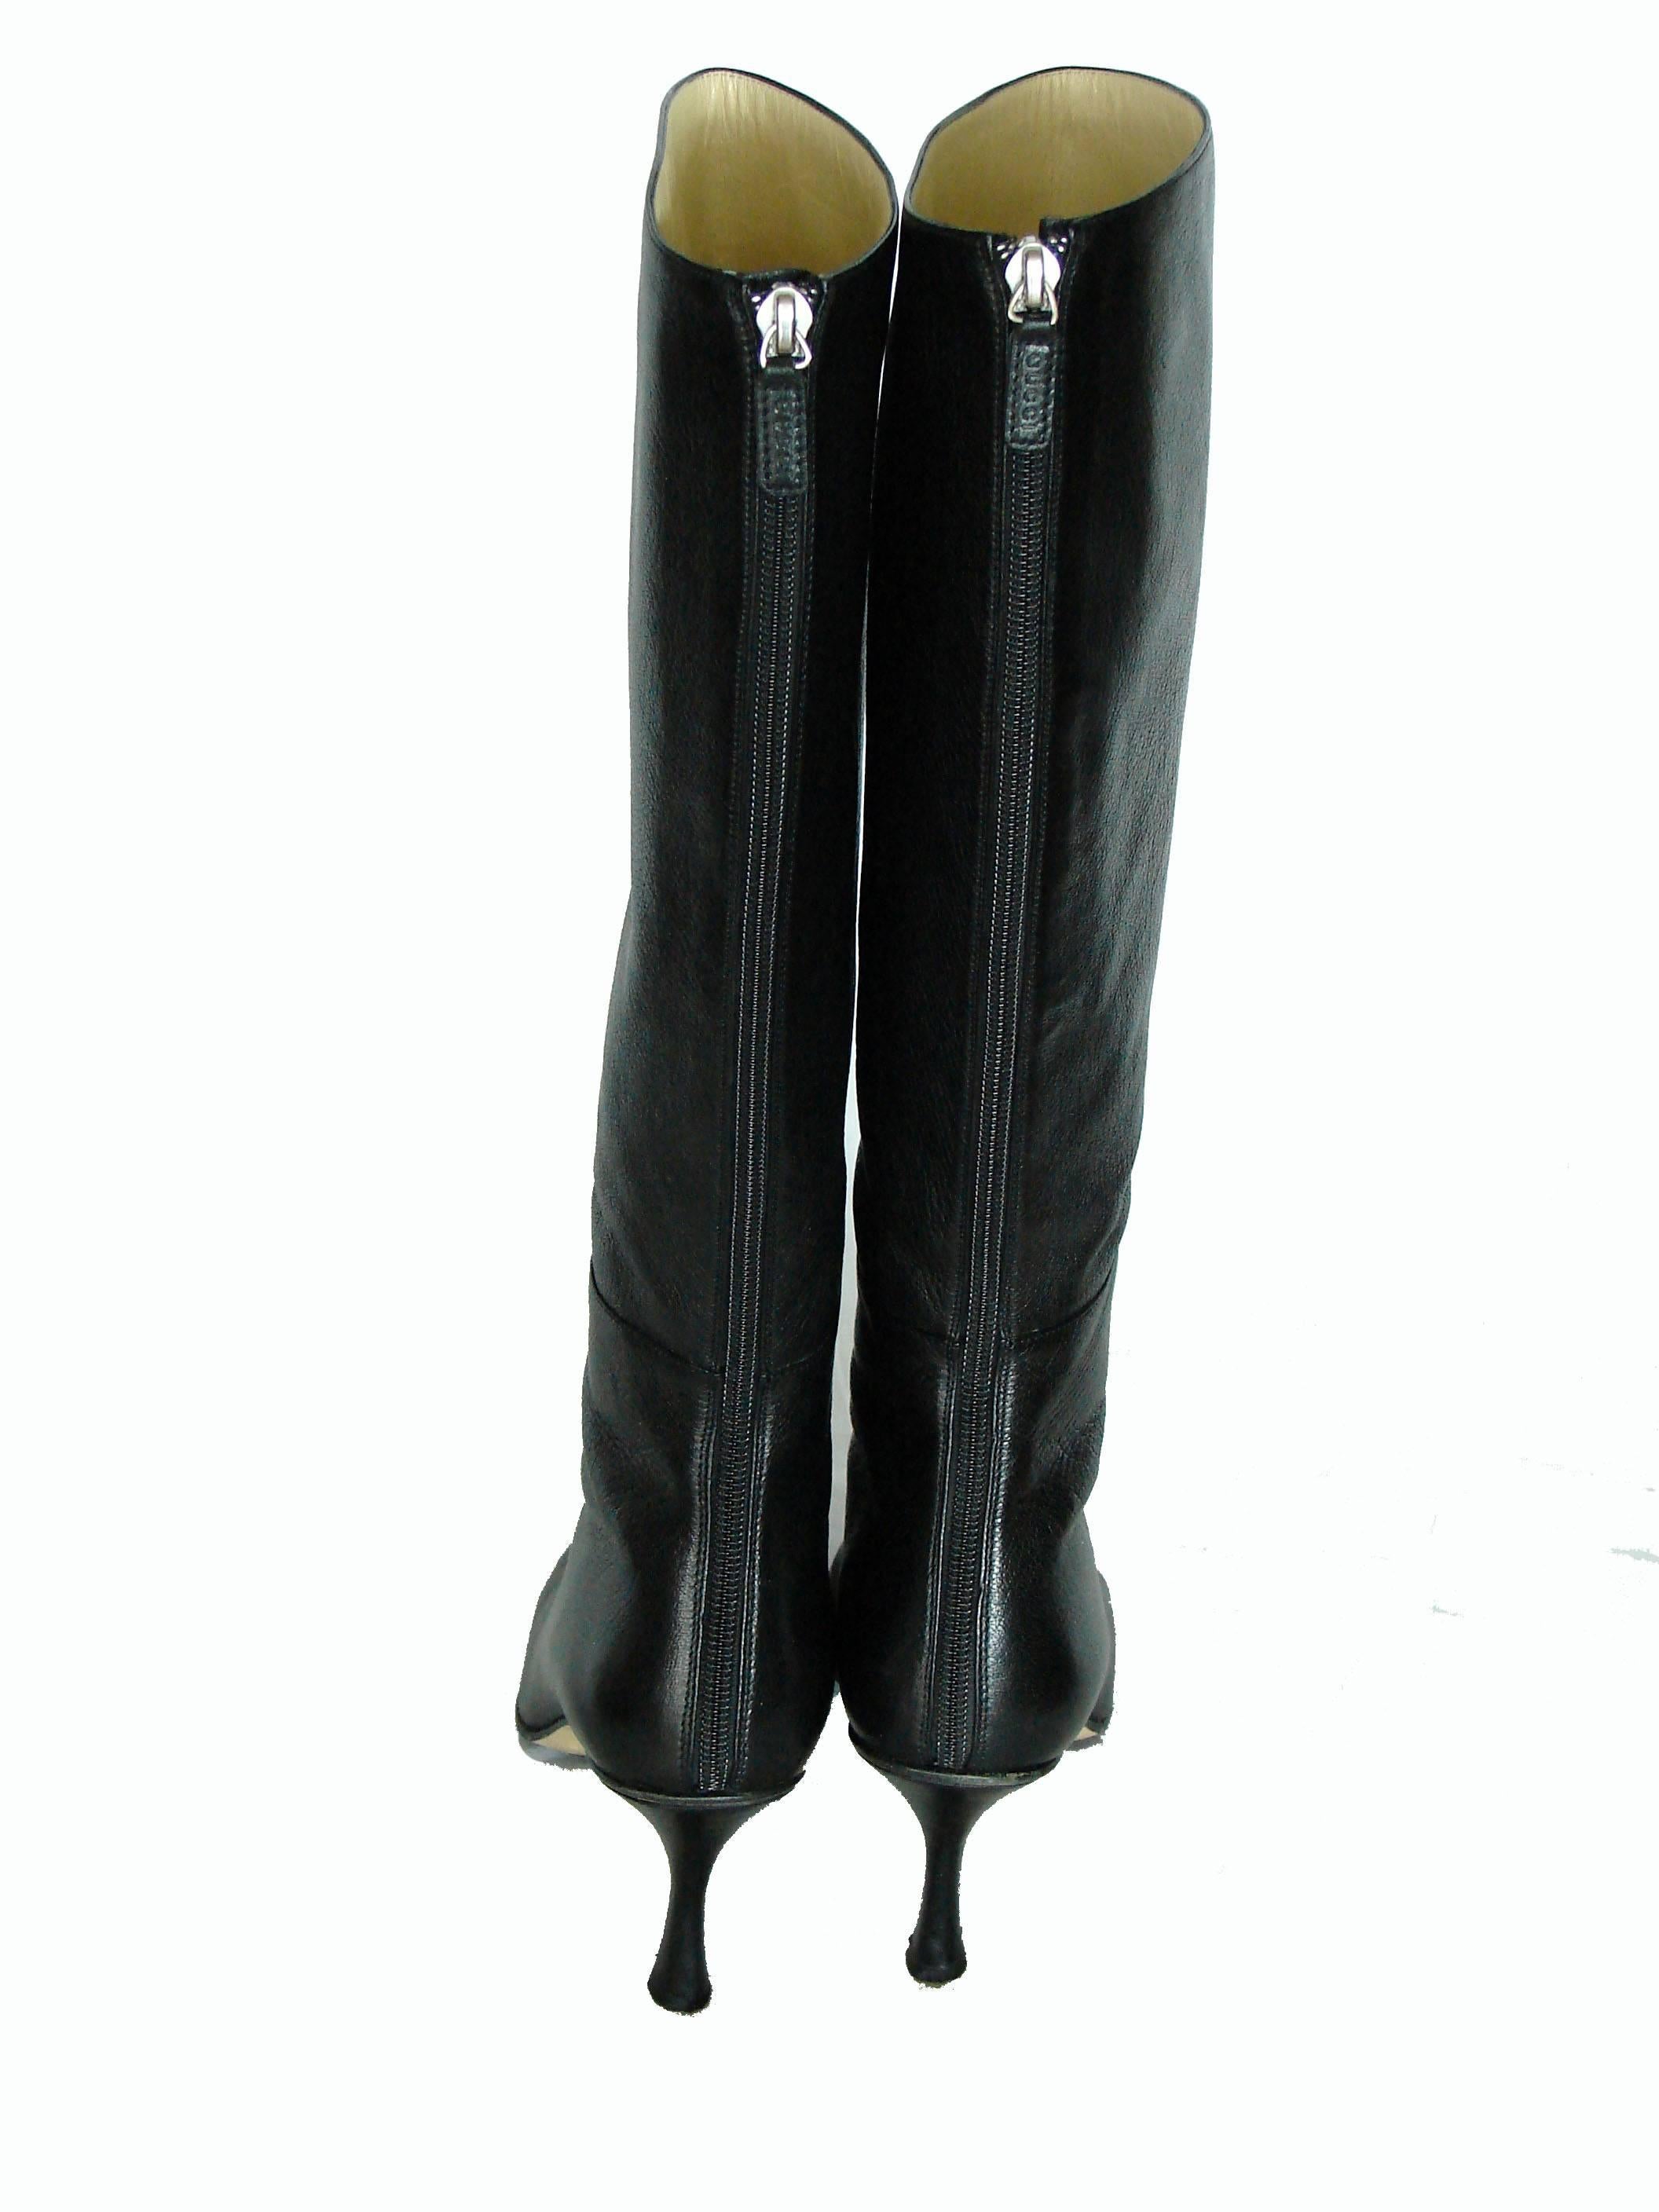 Gucci Black Kidskin Leather Knee High Boots Gomma Bali sz7.5 + Box + Dust Cover 2